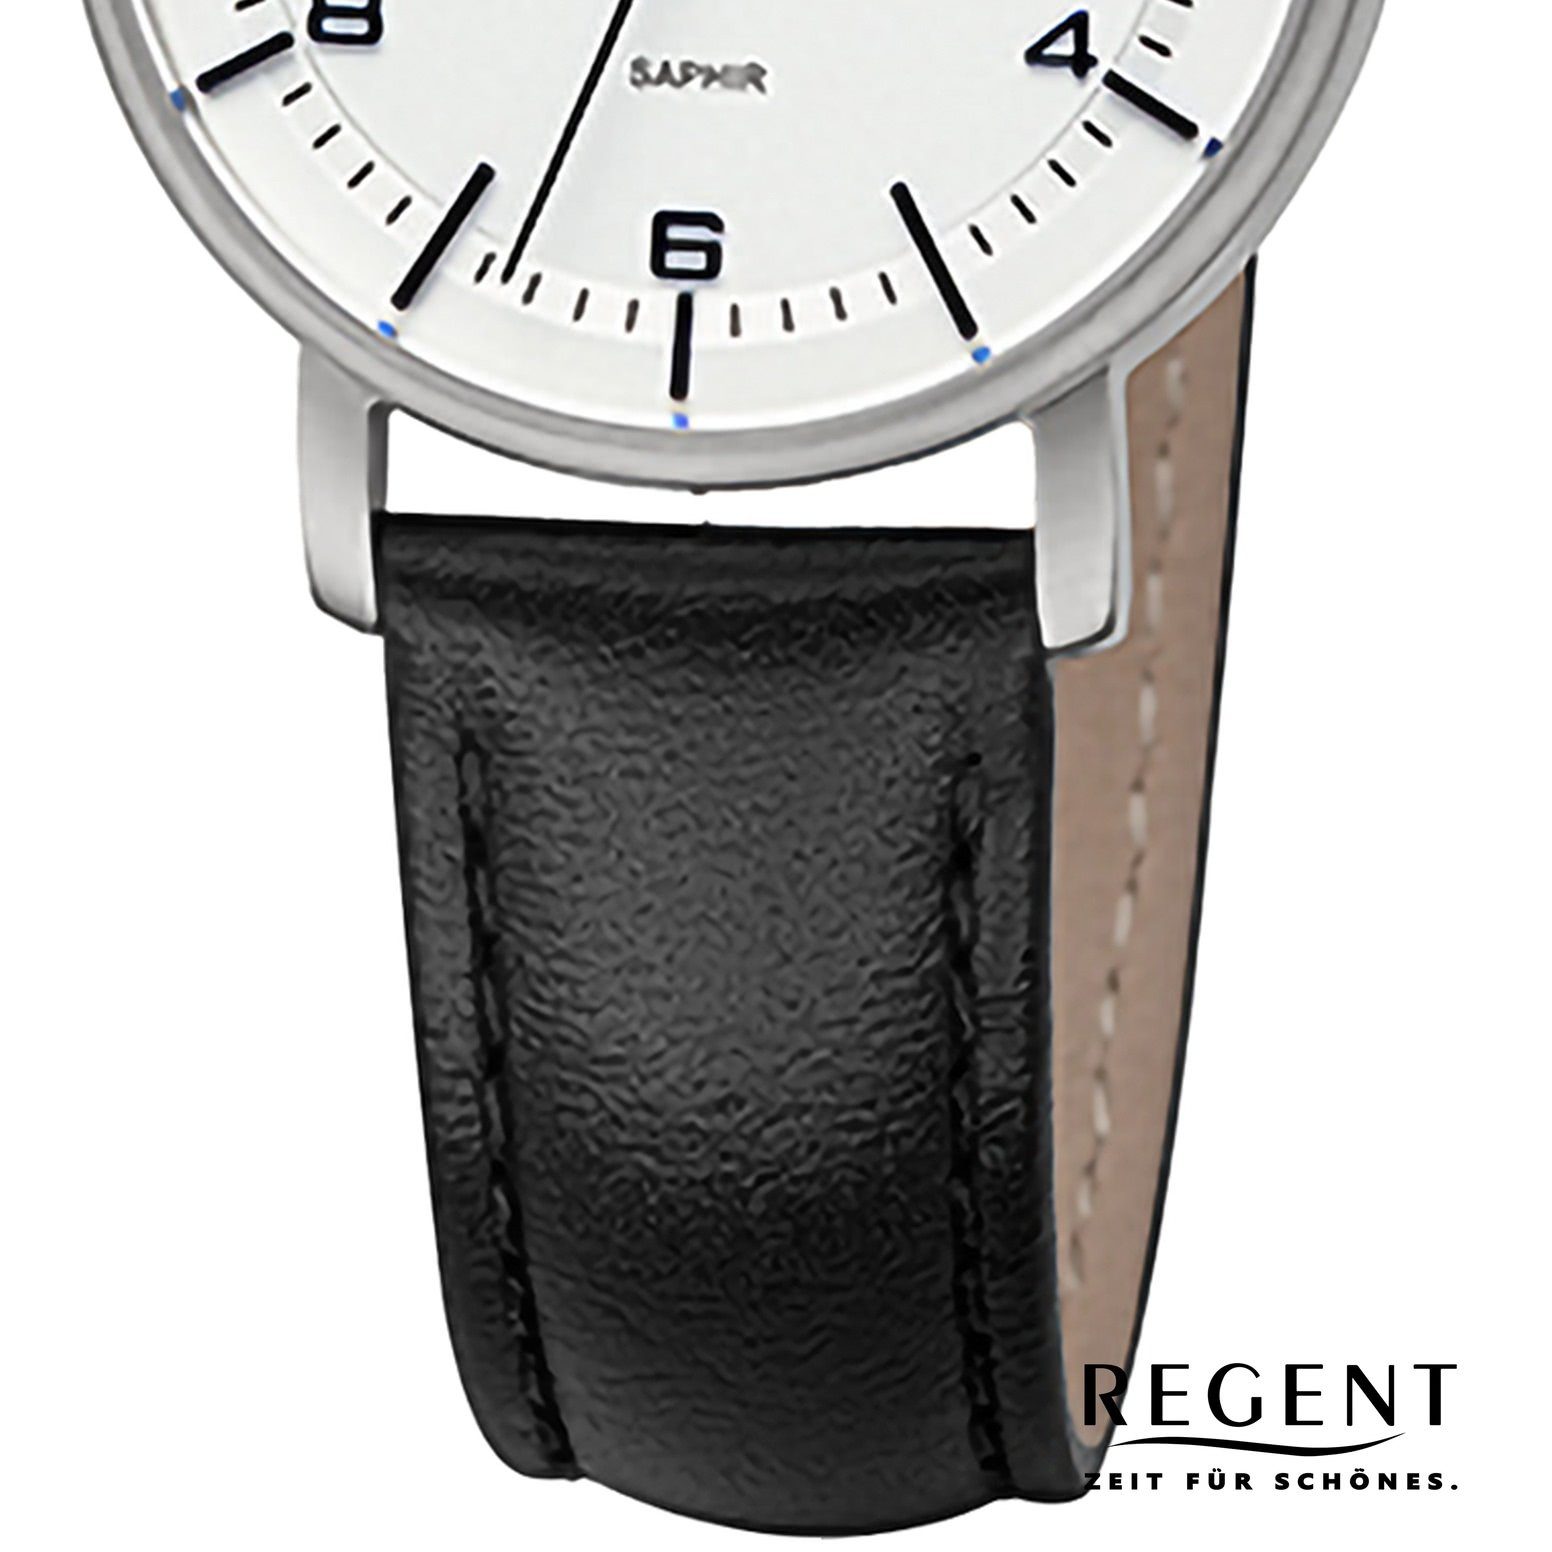 32mm), Regent Armbanduhr Quarzuhr rund, groß Analog, Damen (ca. Armbanduhr Damen extra Regent Lederarmband